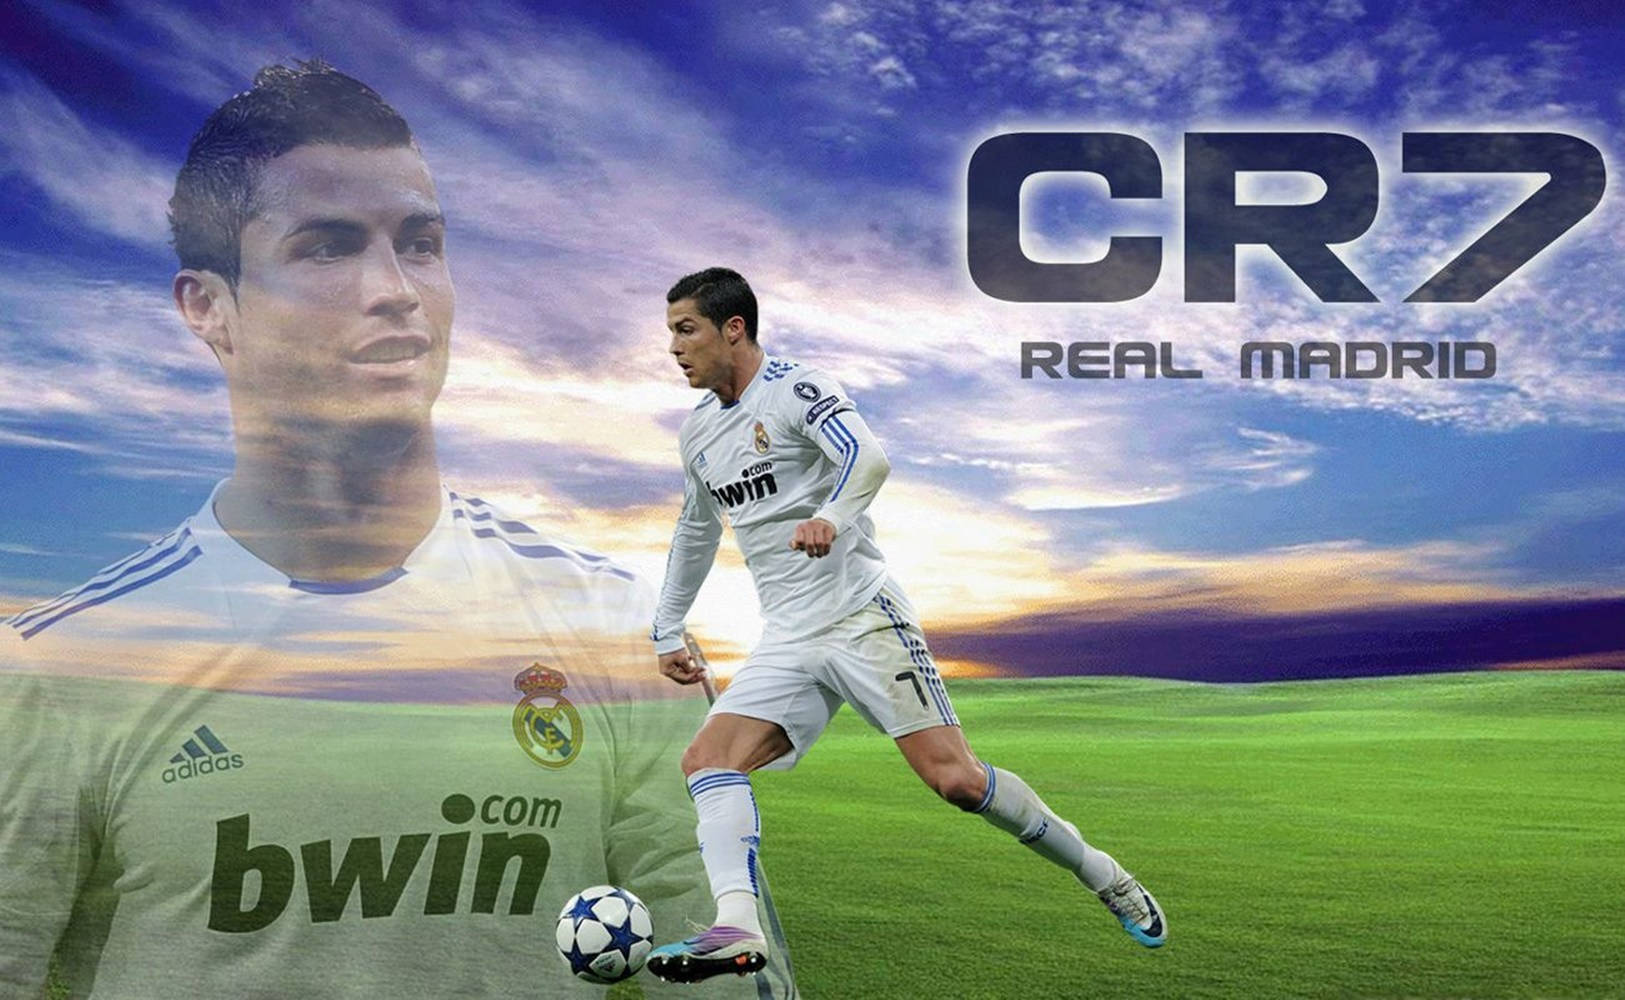 Cristiano Ronaldo Cool Real Madrid Football Field Background